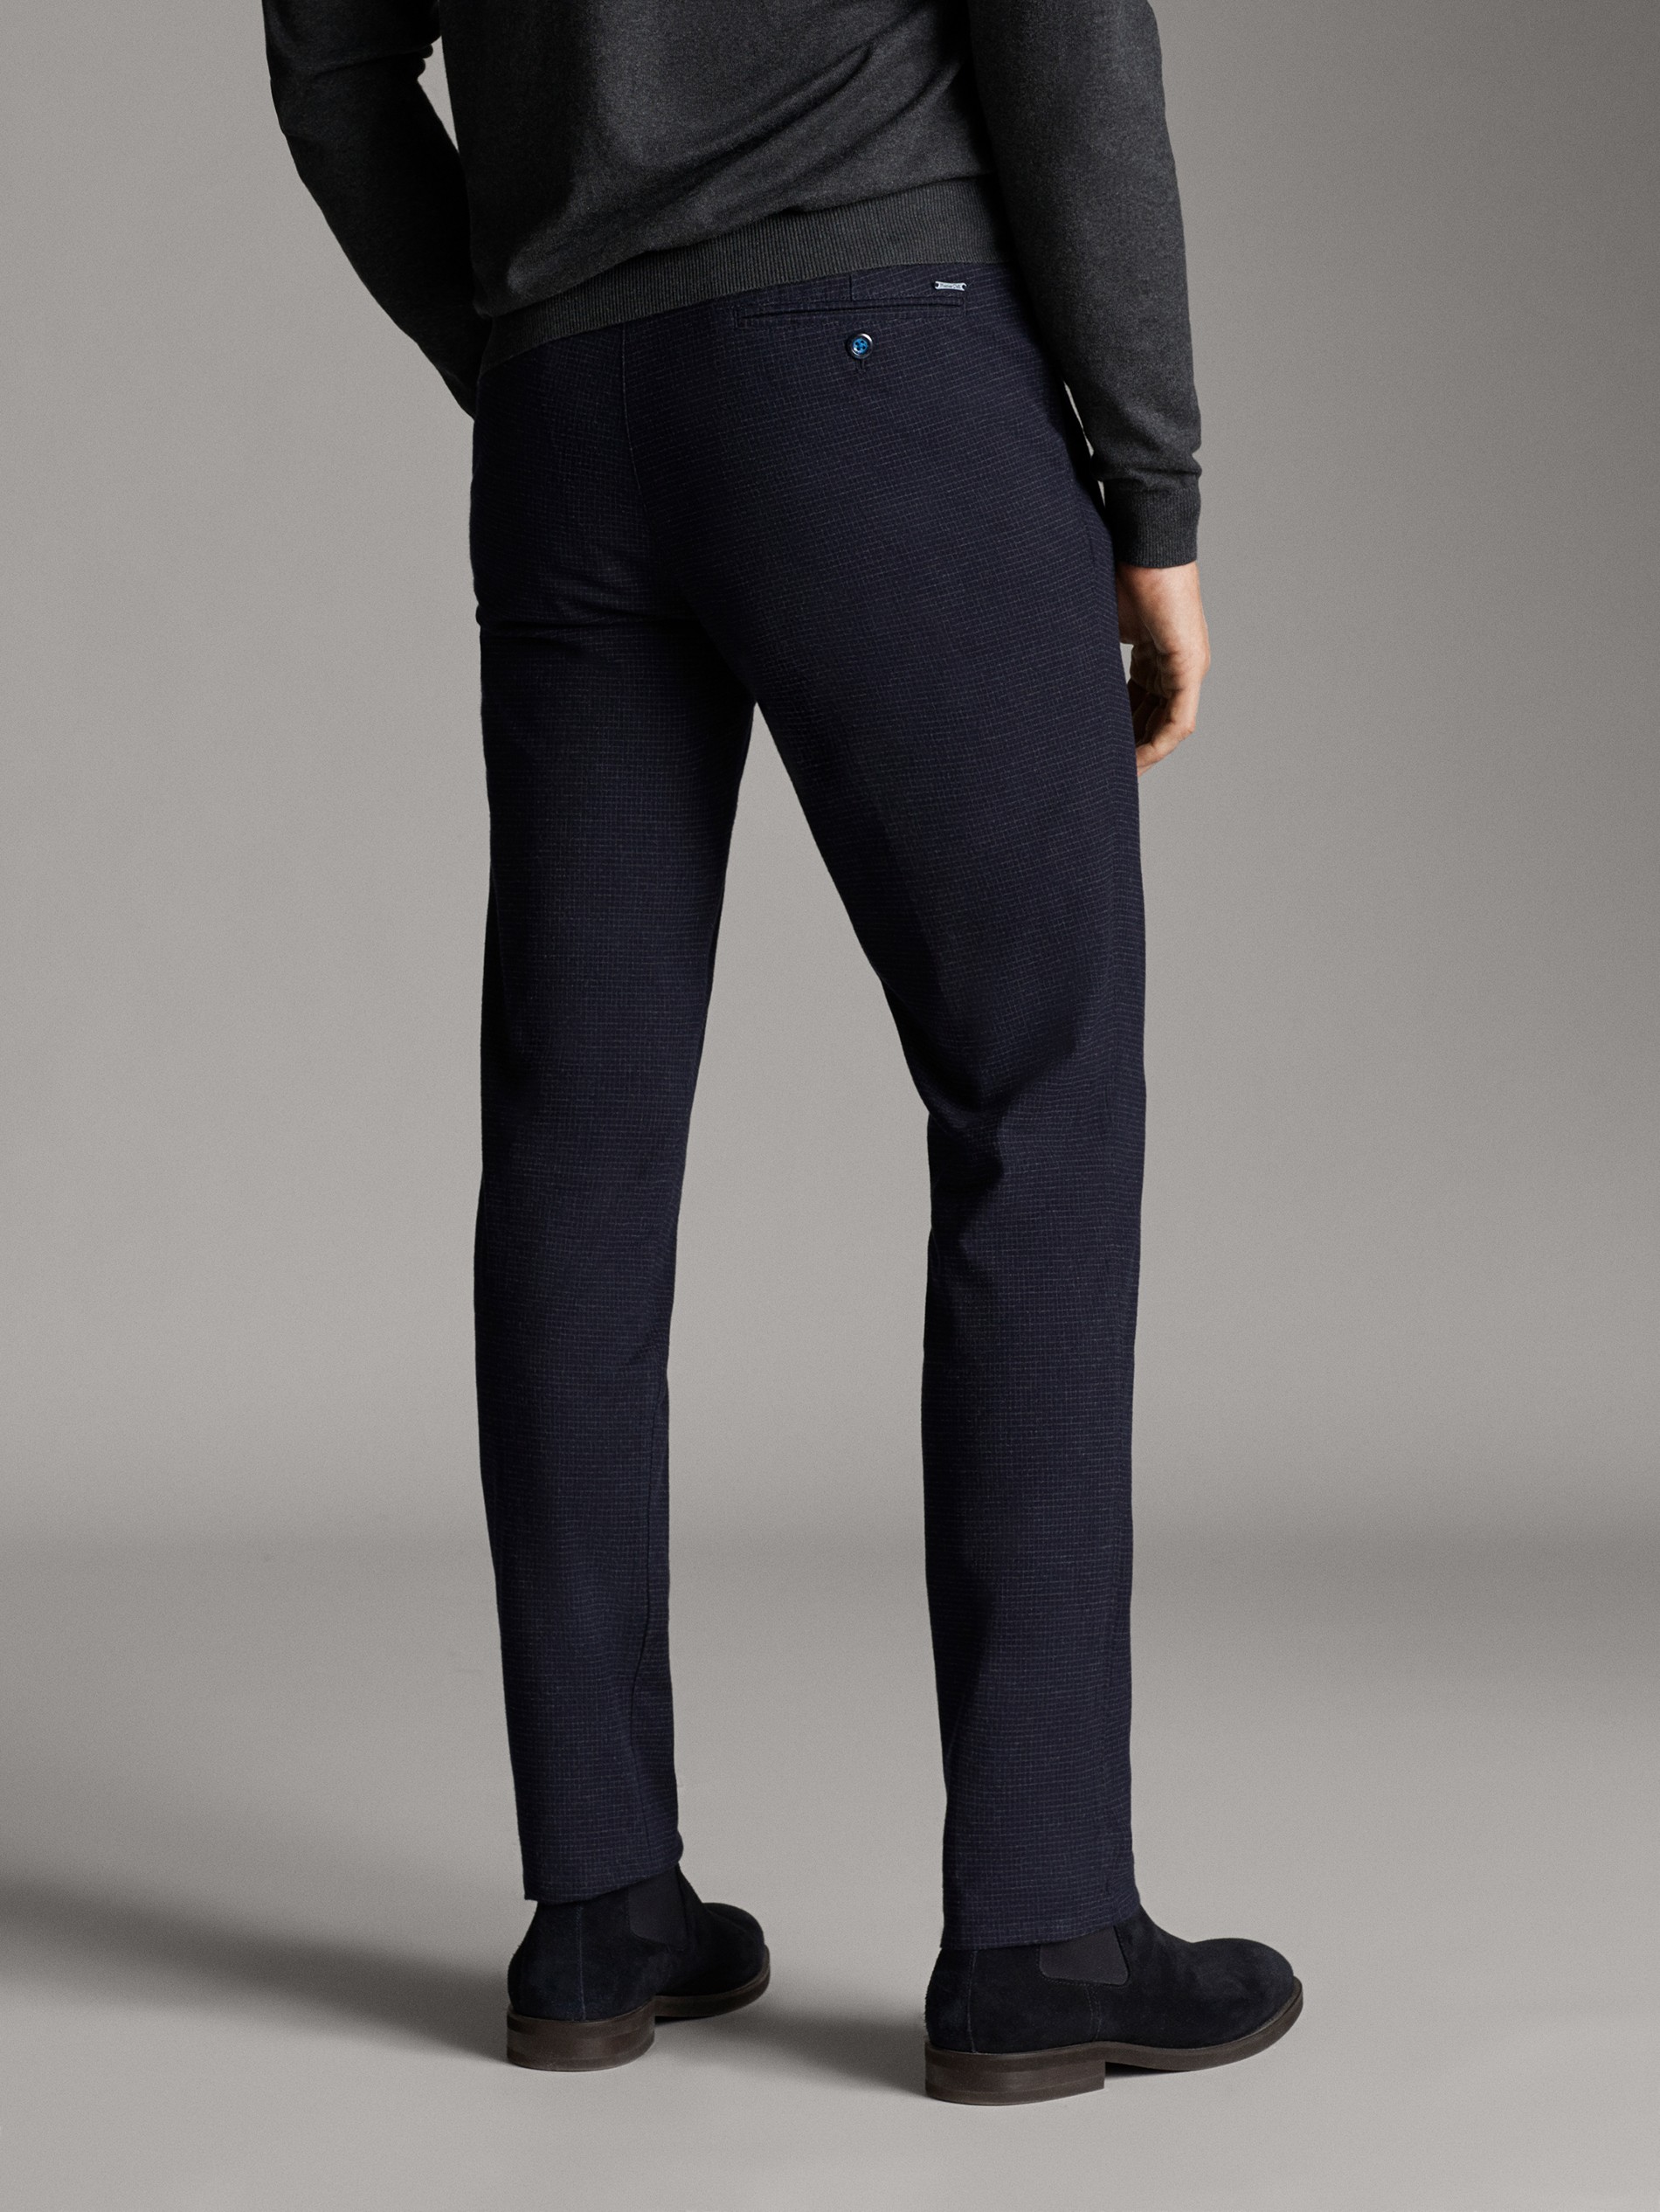 Massimo Dutti Slim Fit Micro Check Cotton Trousers - Big Apple Buddy